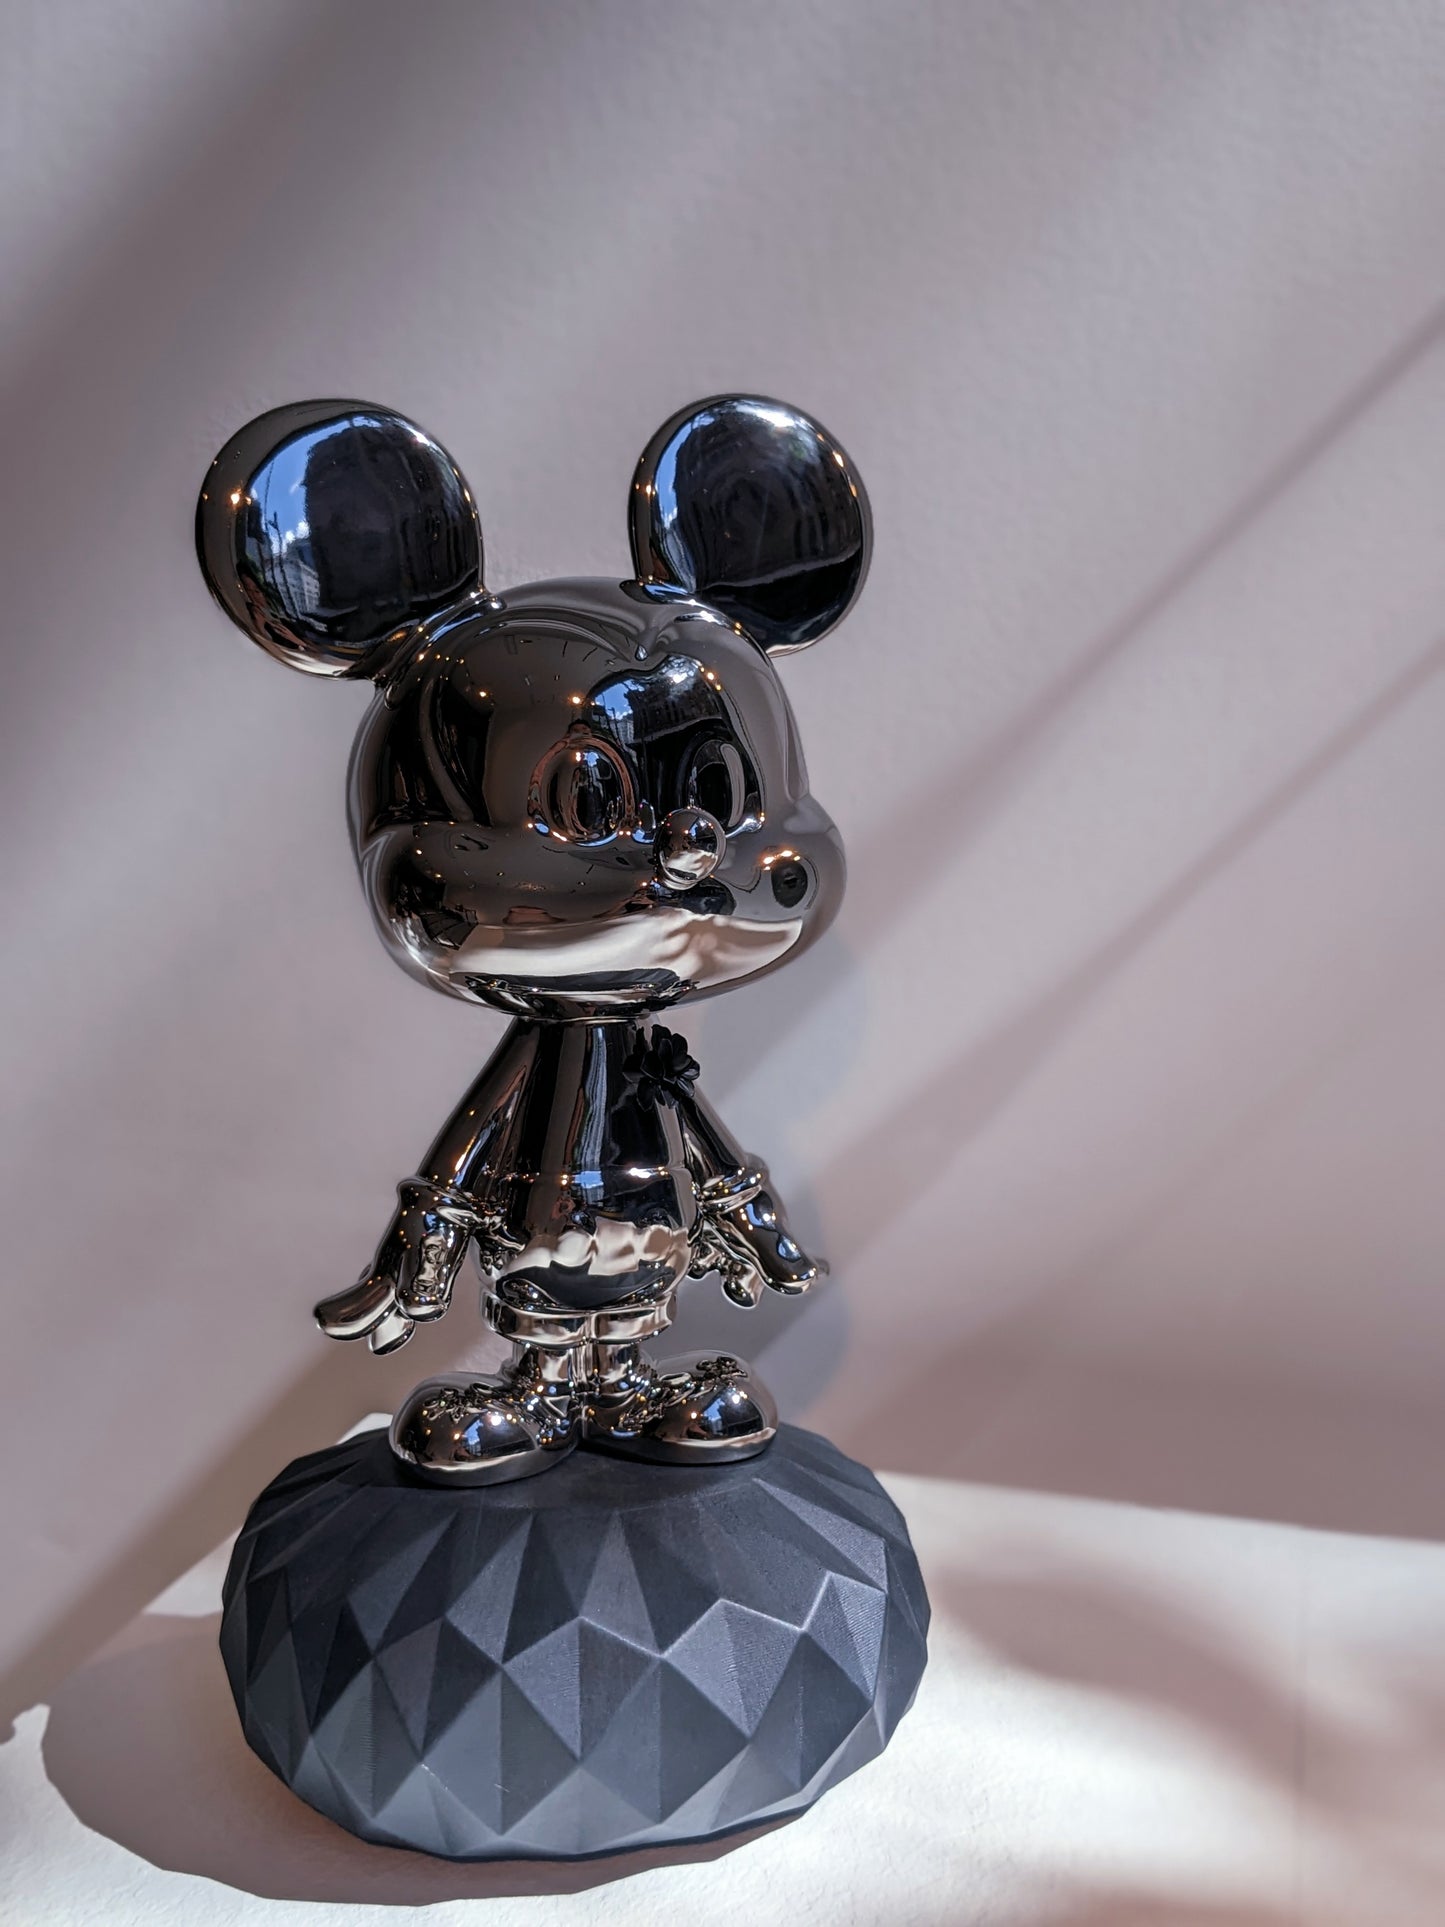 Mickey Mouse Platinum Sculpture